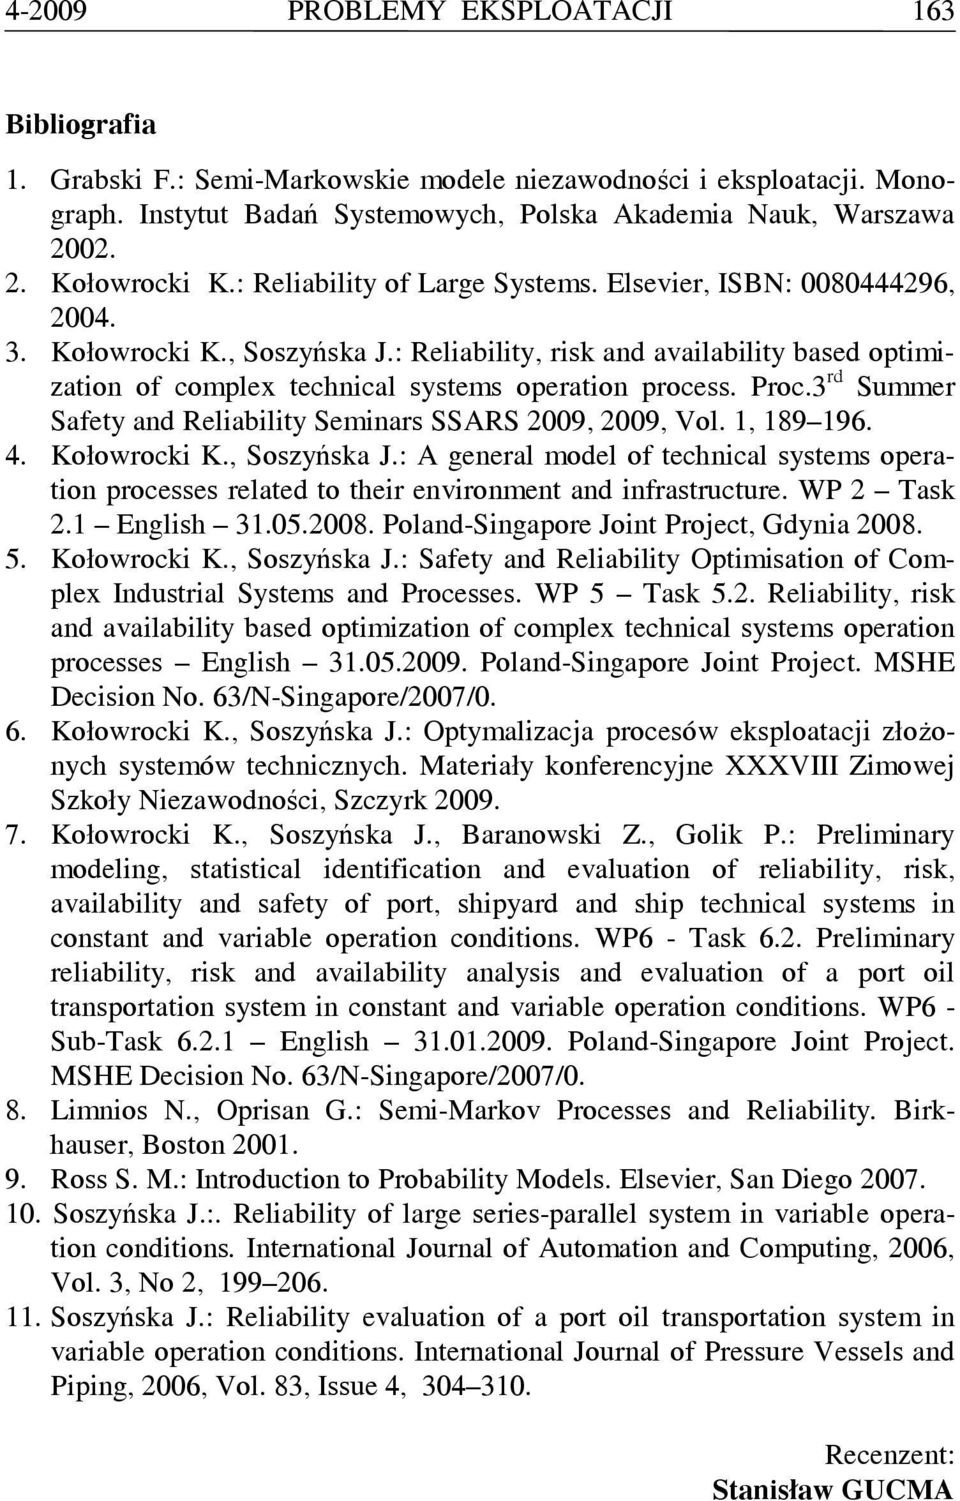 rd Summer Safety and Reliability Seminars SSARS 29, 29, Vol. 1, 189 196. 4. Kołowrocki K., Soszyńska J.